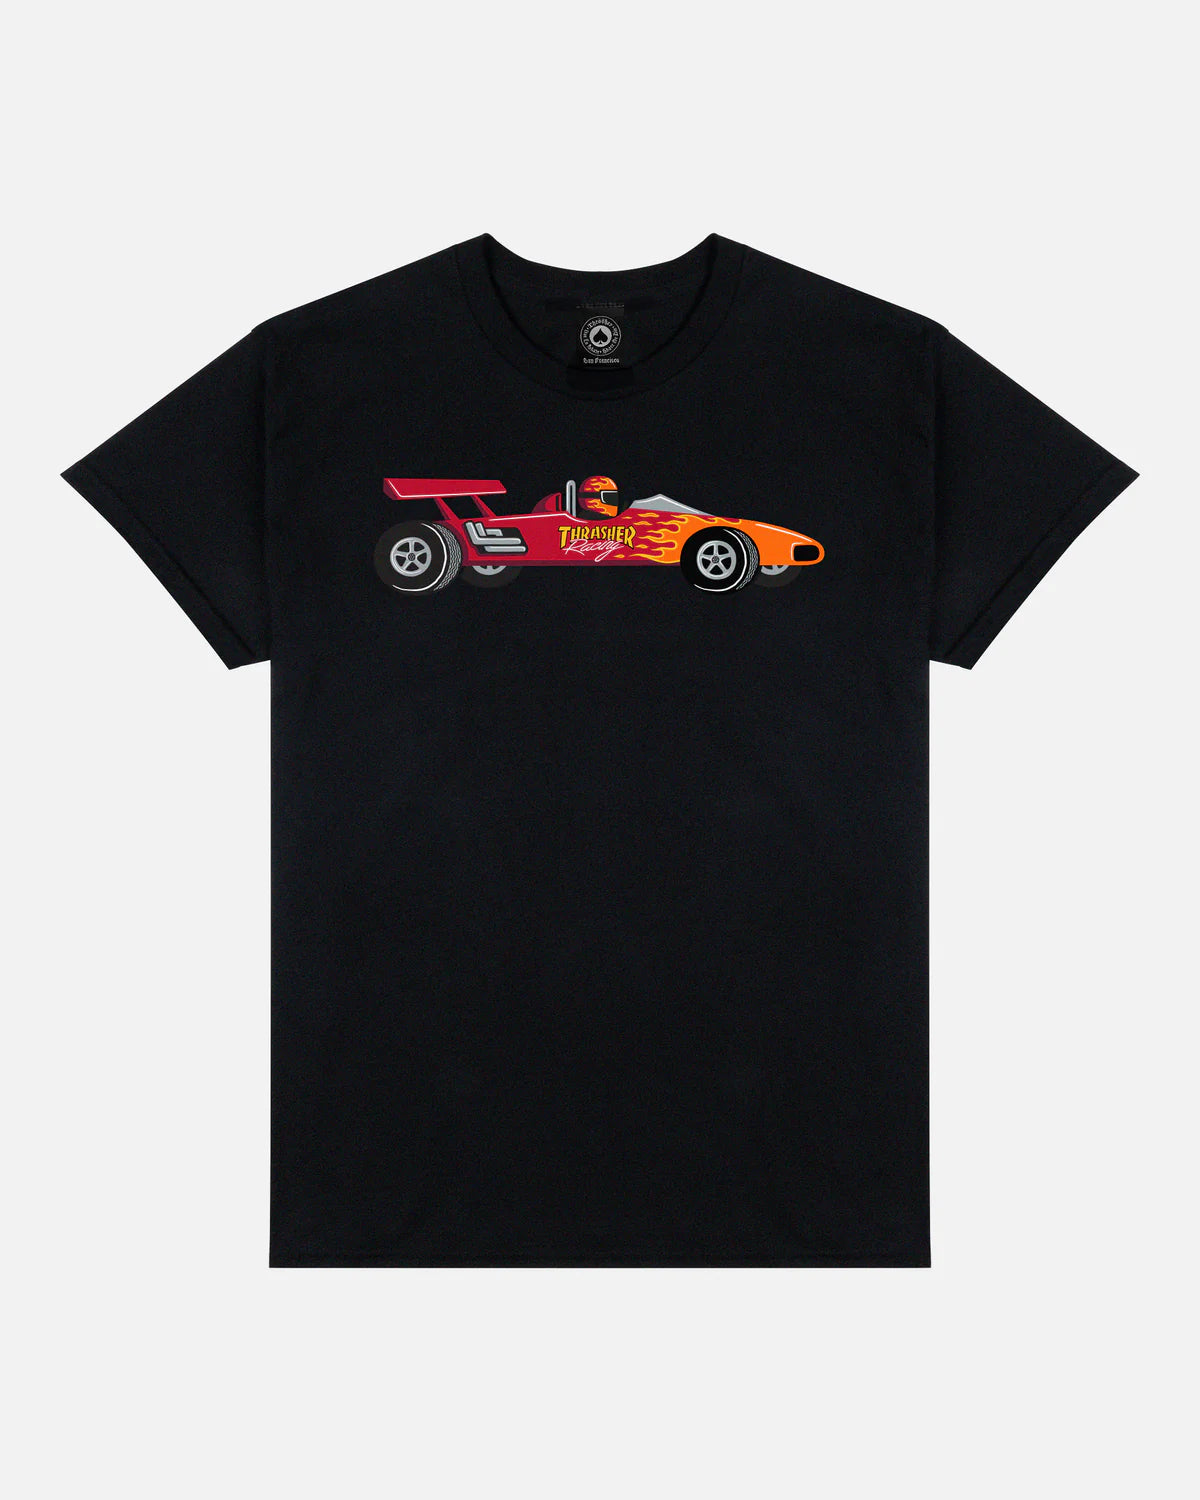 Thrasher Racecar Black S/s Shirt